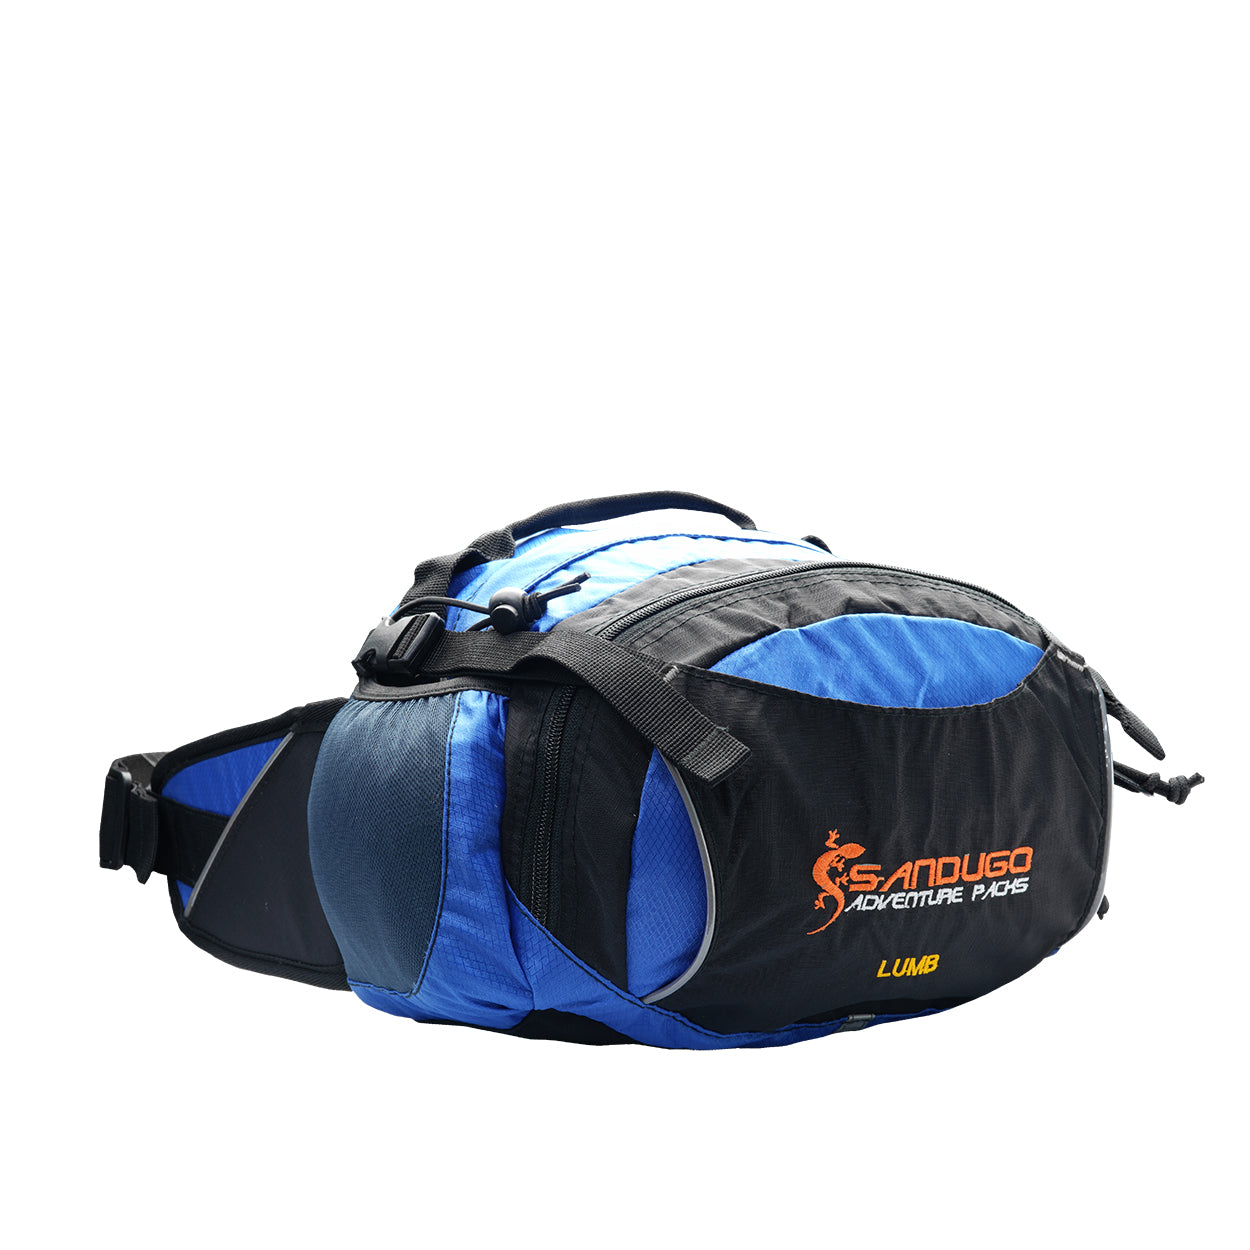 Sandugo Lumb Adventure Waist Pack / Belt Bag